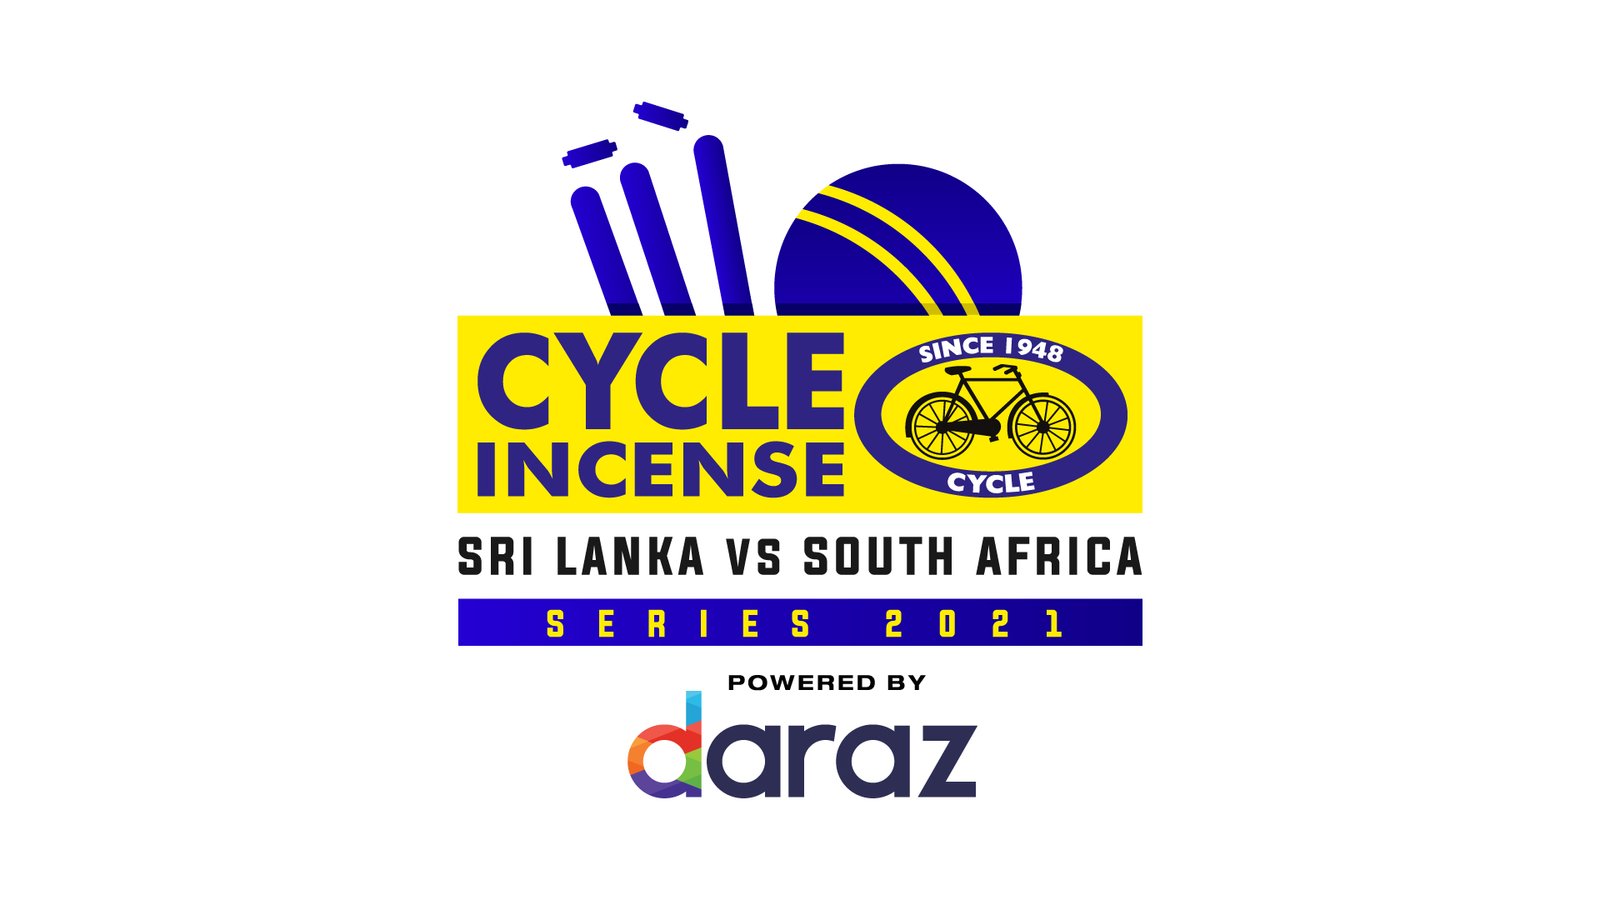 Cycle, Daraz ride on Sri Lanka cricket to expand horizons